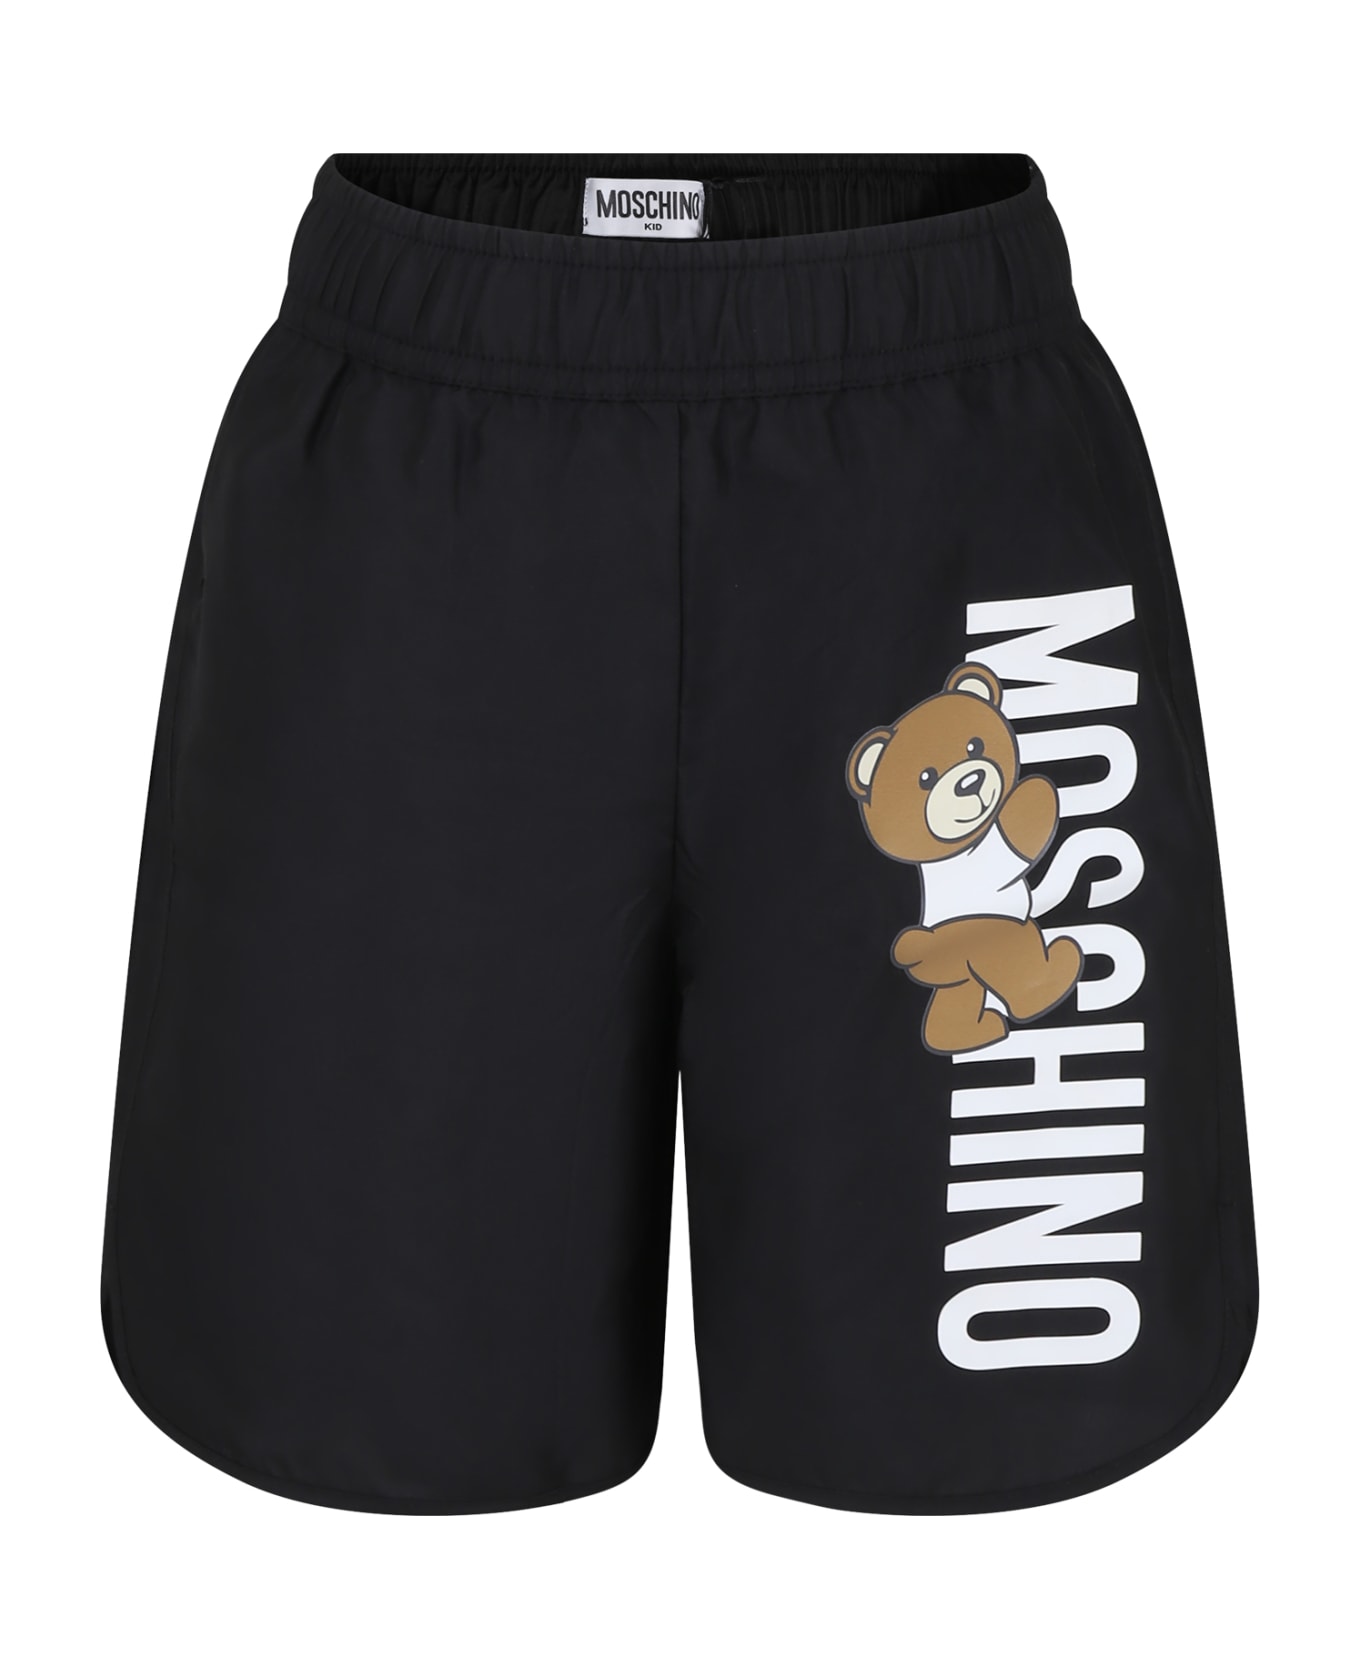 Moschino Black Swim Shorts For Boy With Teddy Bear And Logo - Black